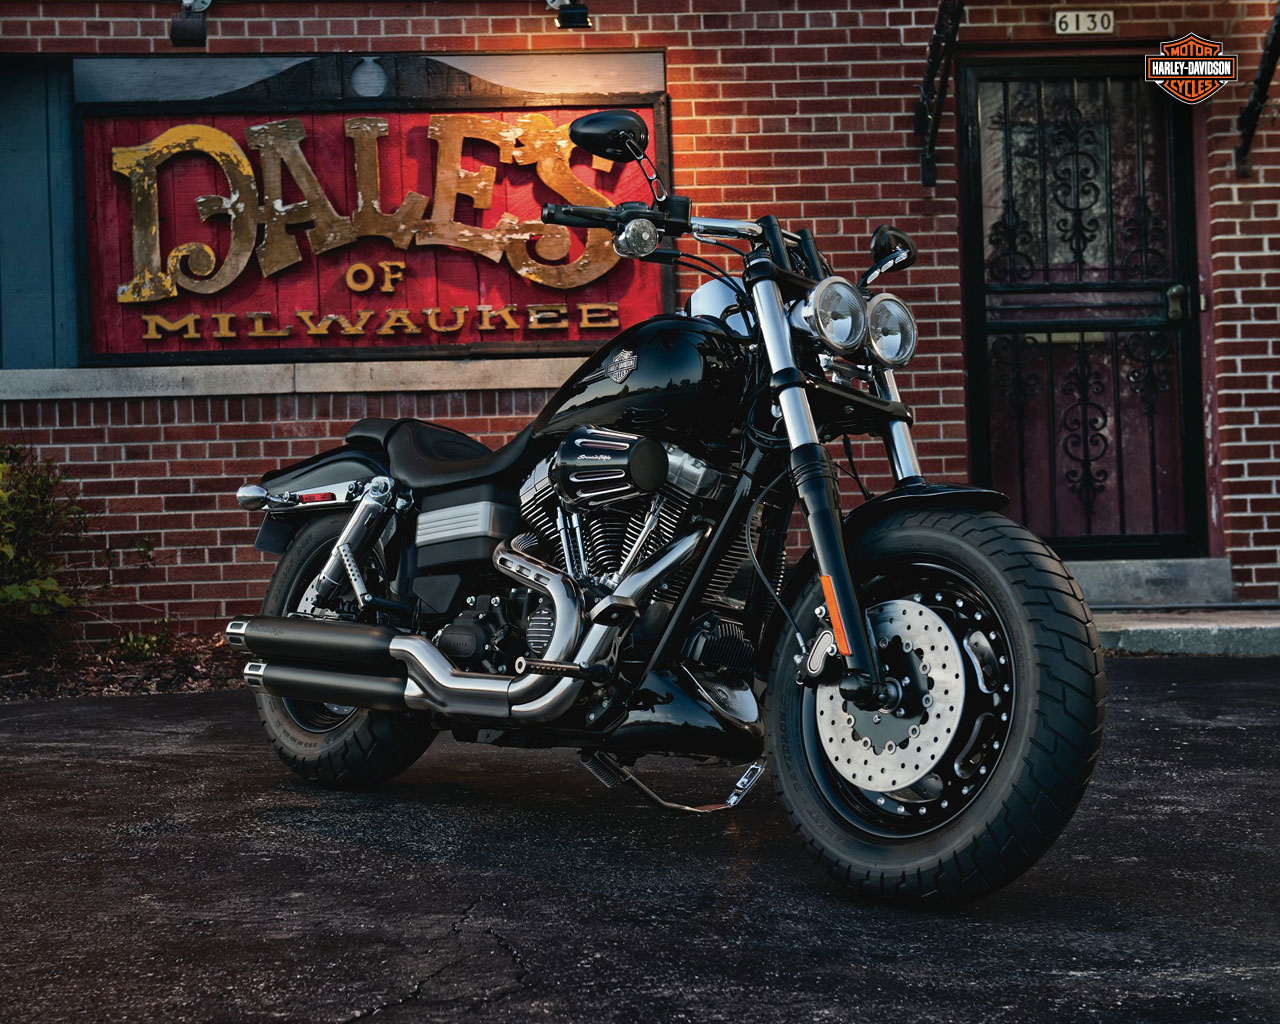 2012 Harley Davidson Fxdf Dyna Fat Bob Review